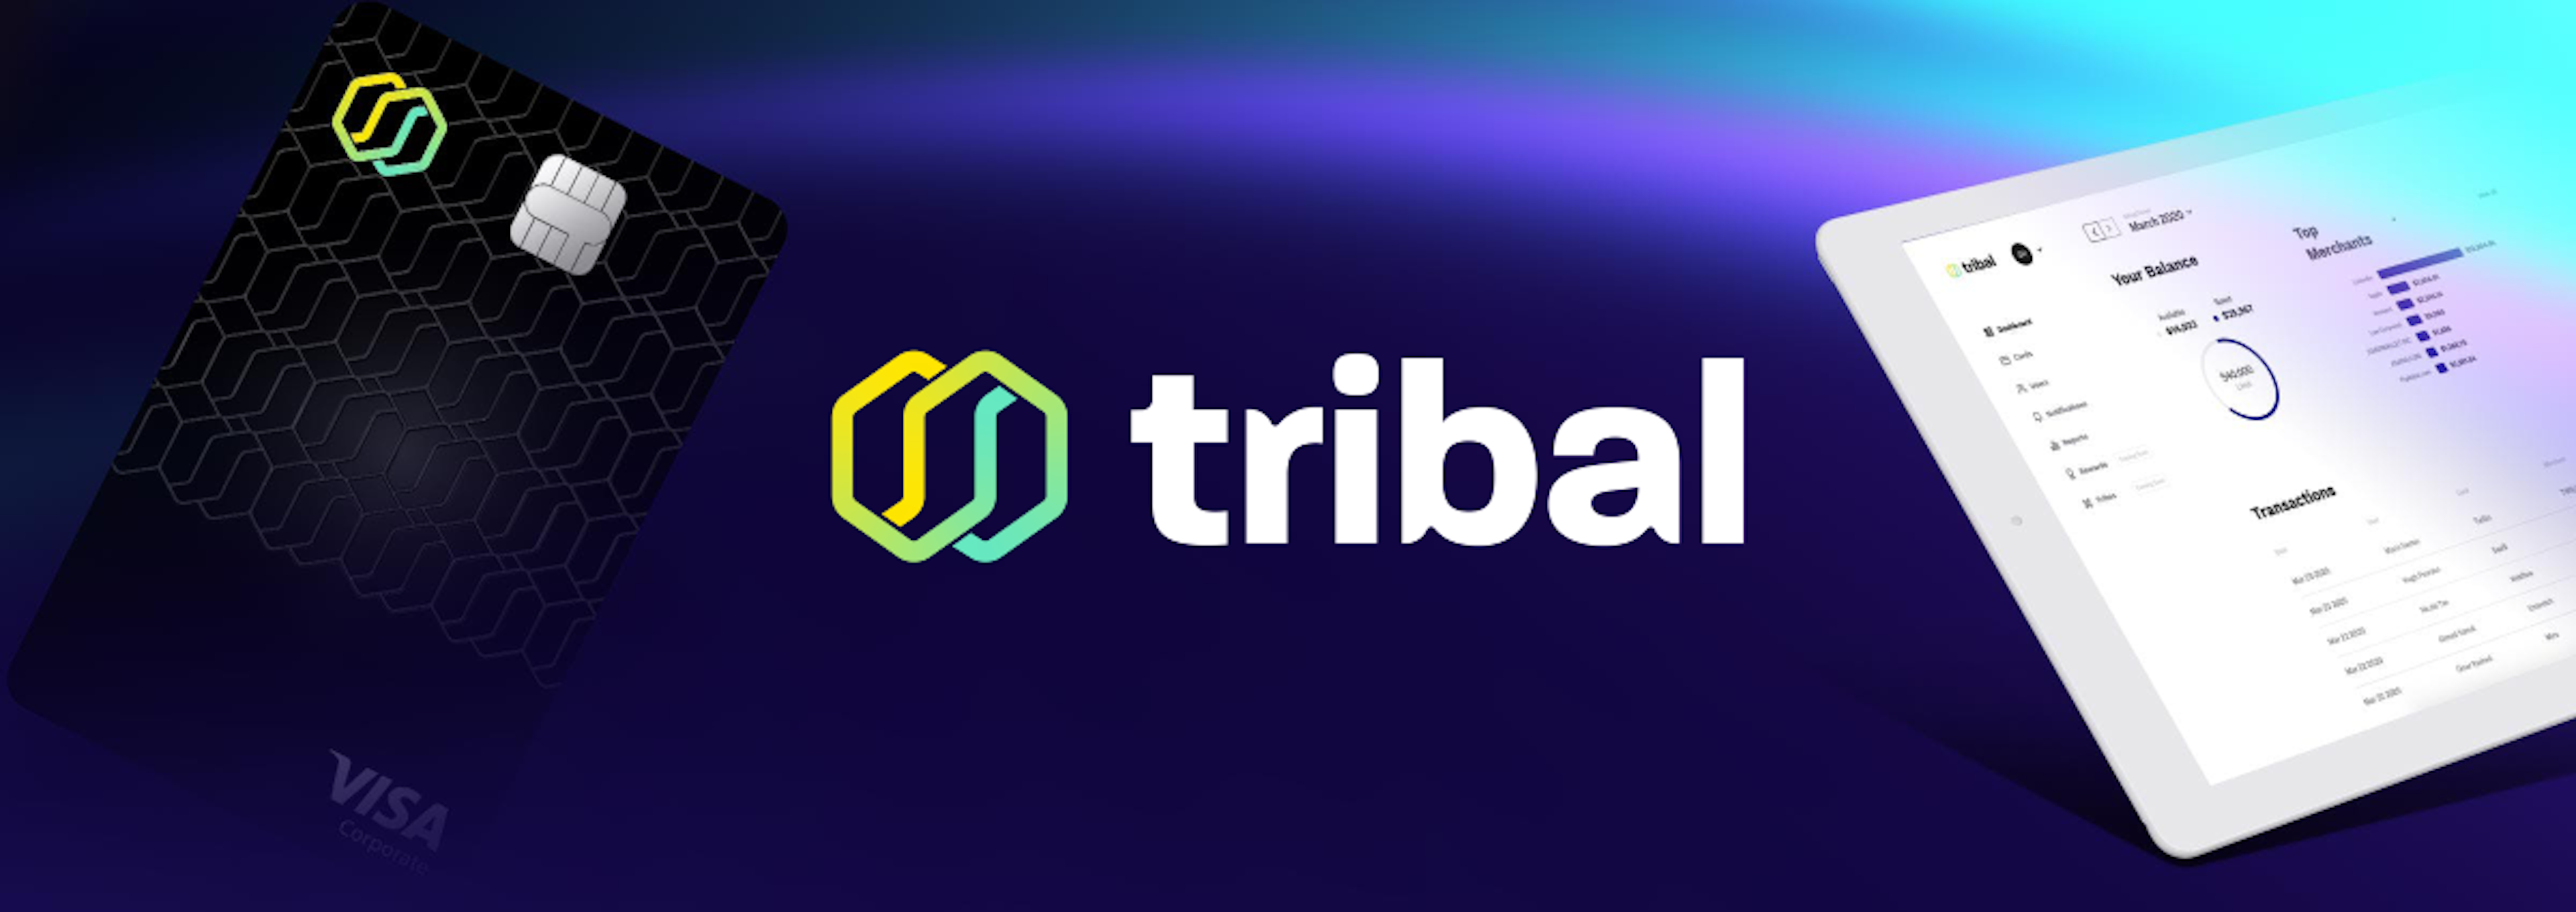 tribal-thumbnail